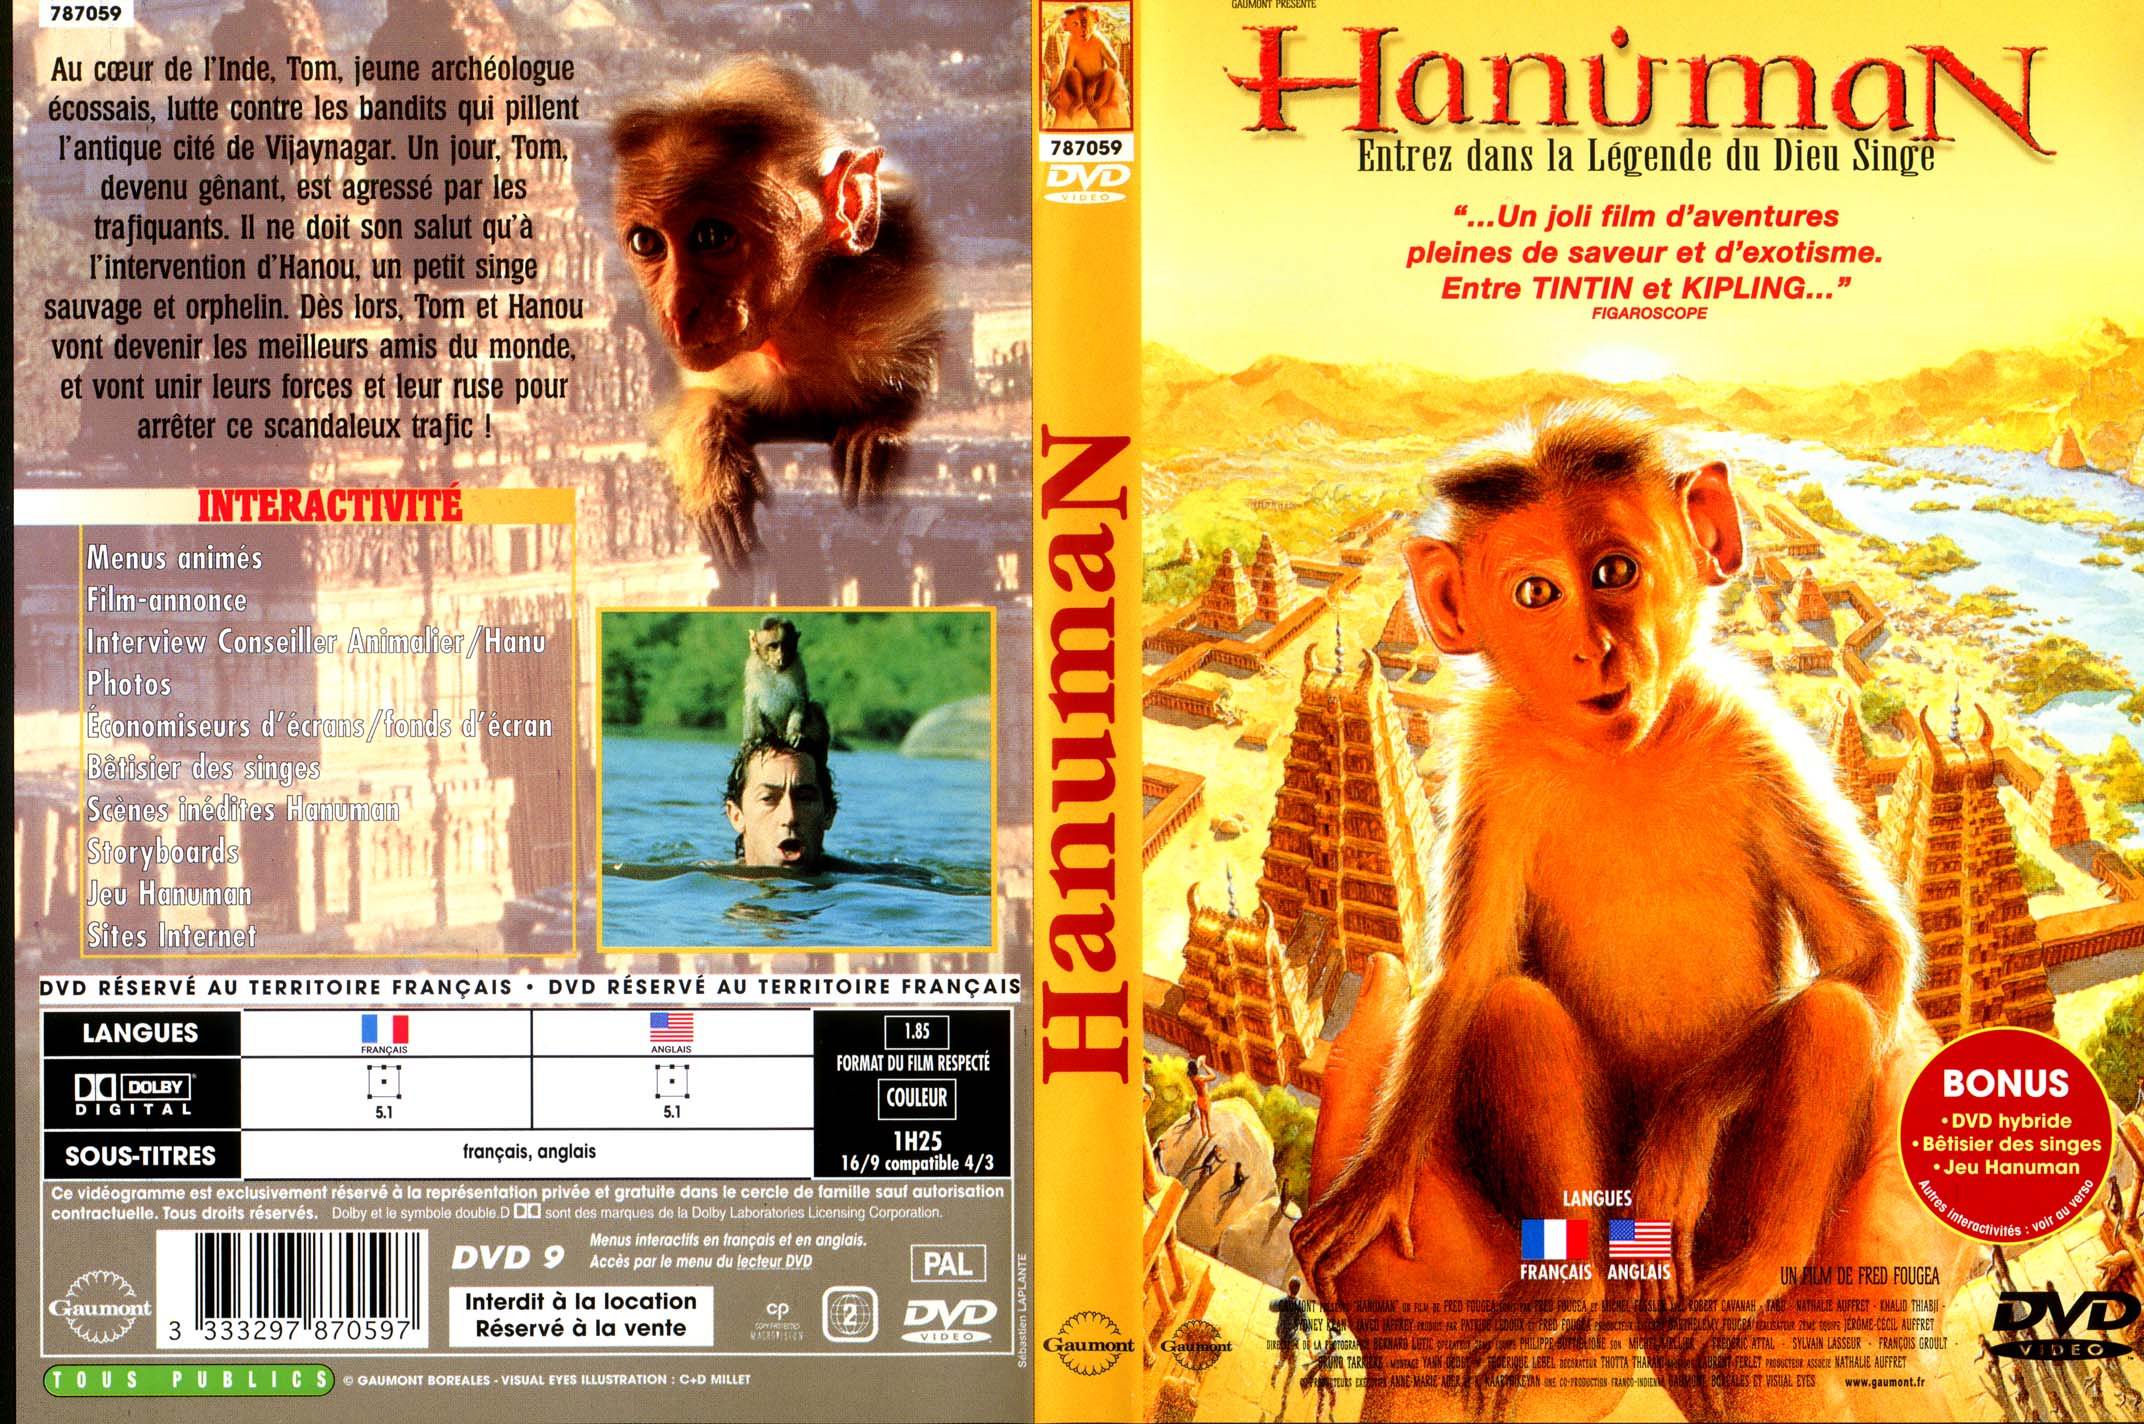 Jaquette DVD Hanuman